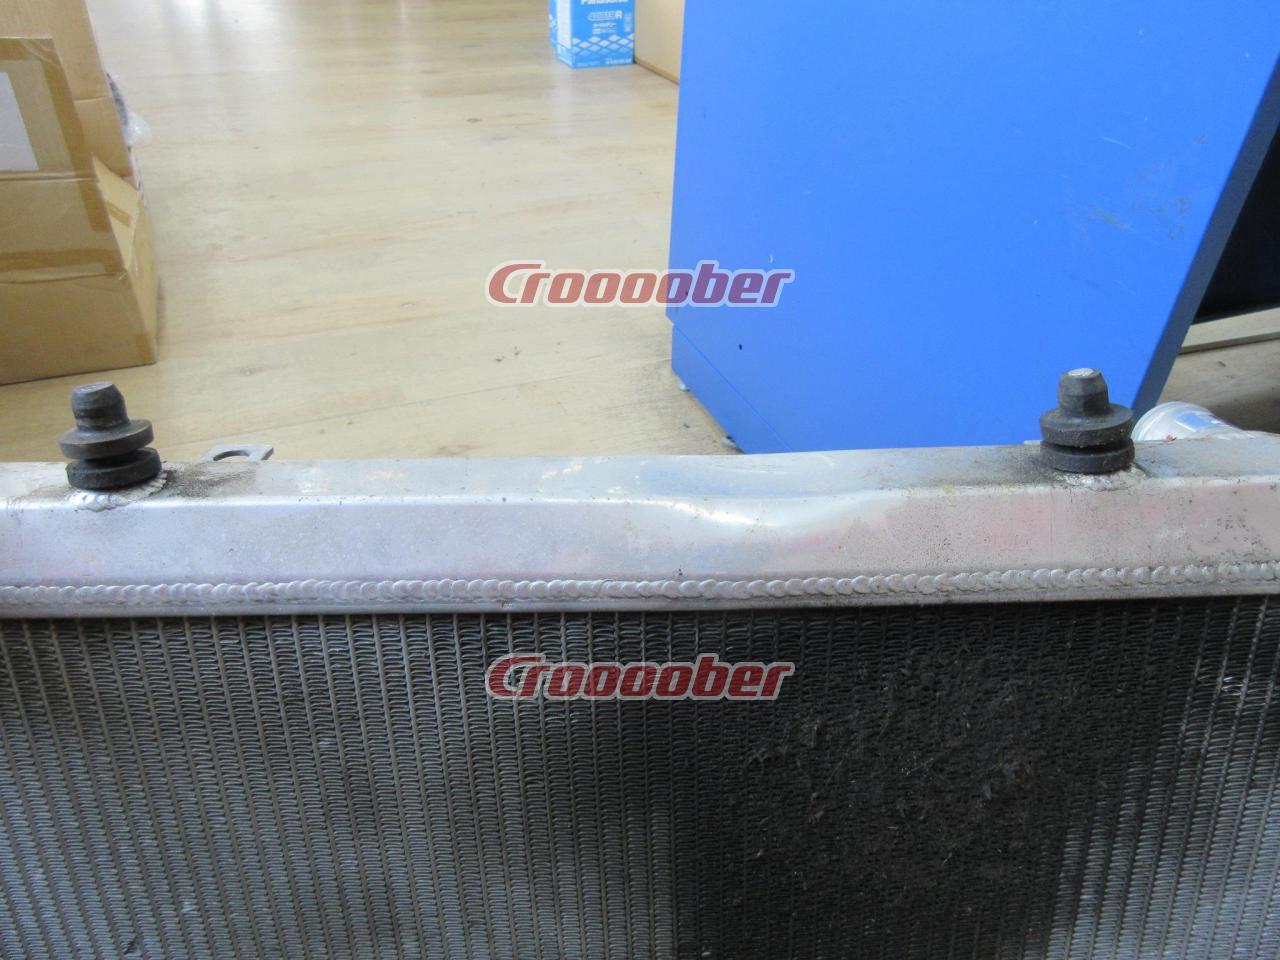 TRUST(トラスト) Greddy シルビア アルミラジエーター | 冷却系 ラジエターパーツの通販なら | Croooober(クルーバー)